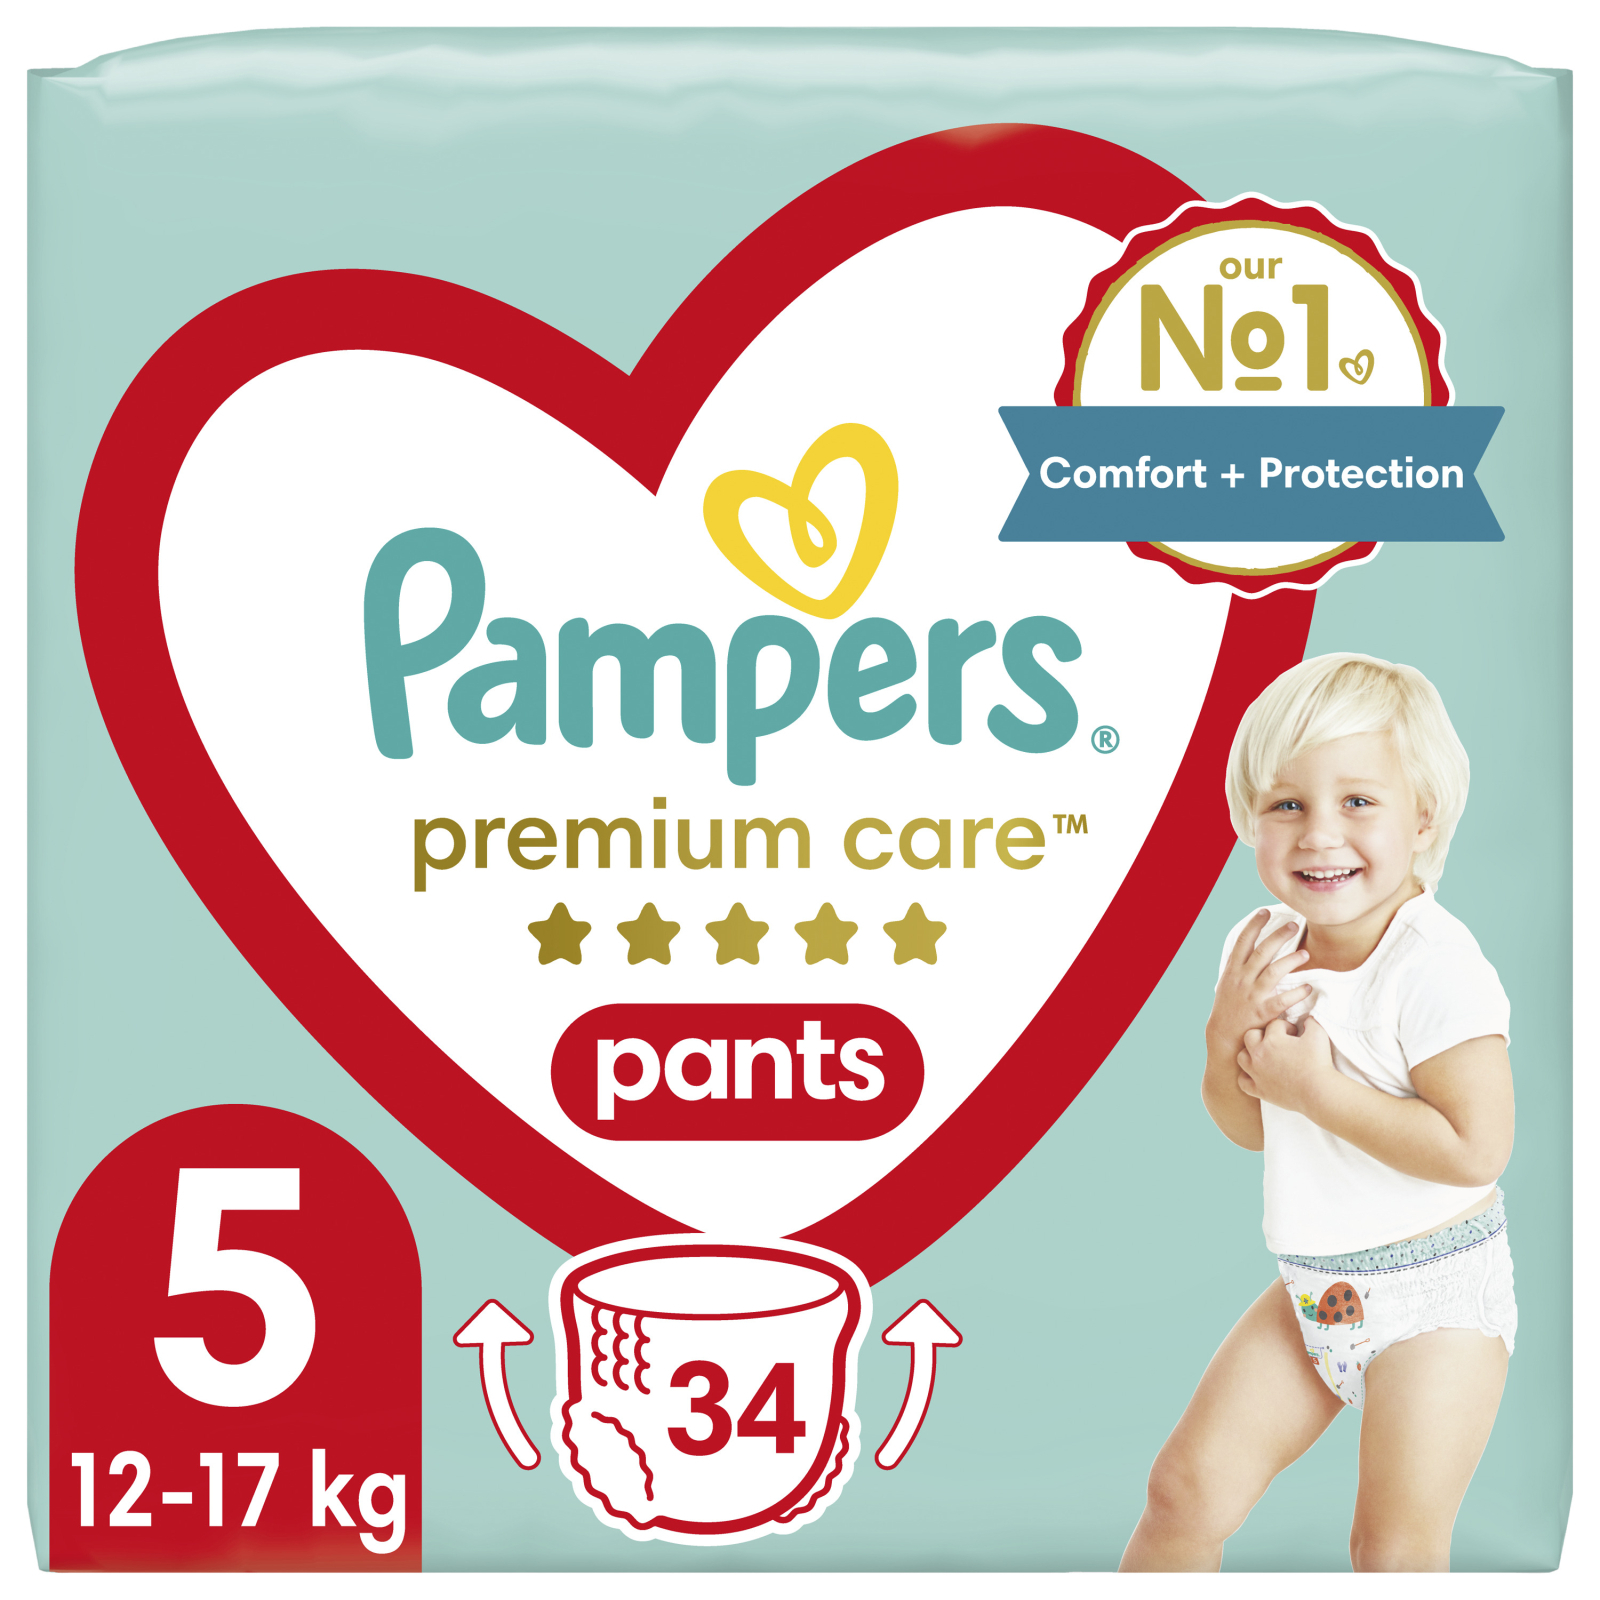 Підгузки Pampers Premium Care Pants Junior 5, 52 шт (8001090760036)